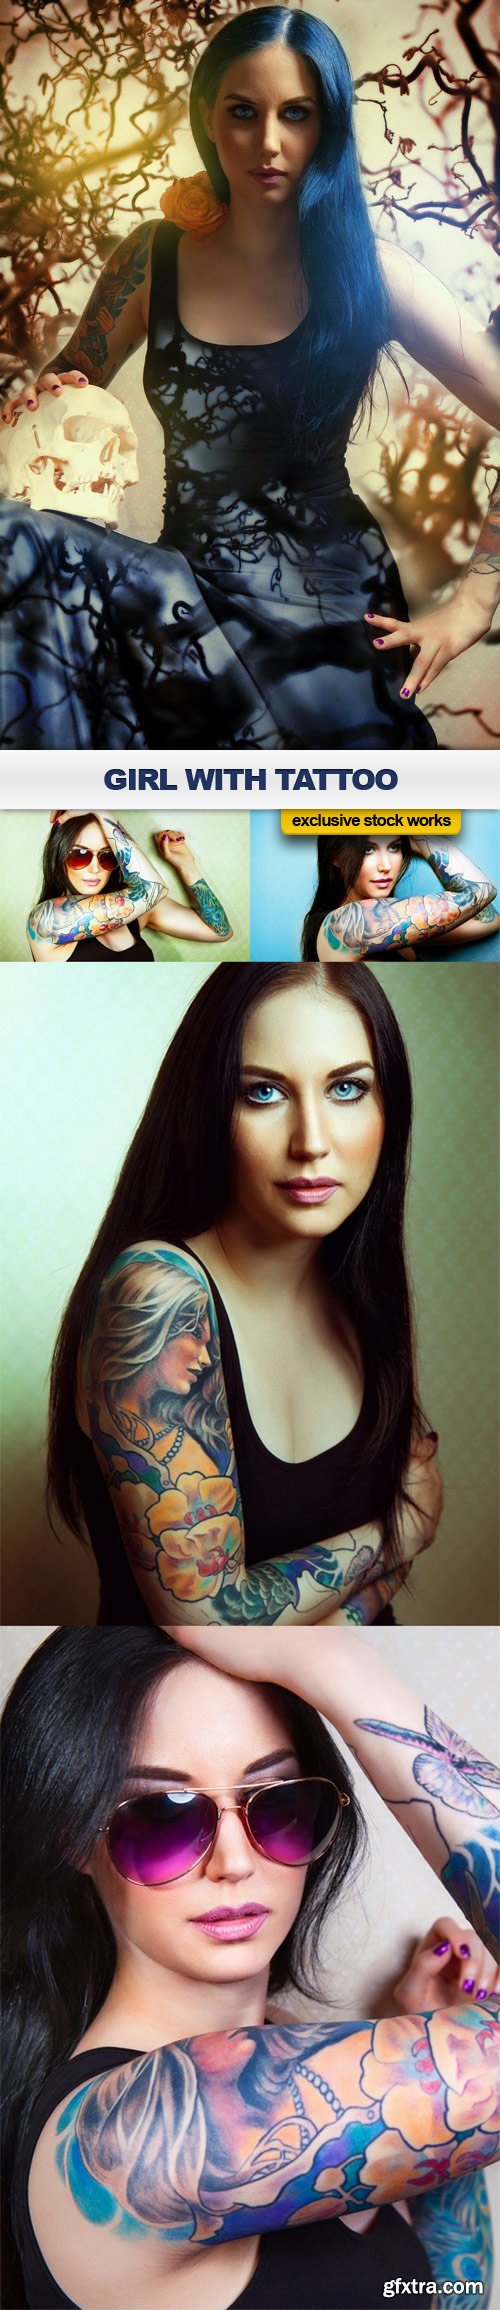 Girl with tattoo - 5 UHQ JPEG